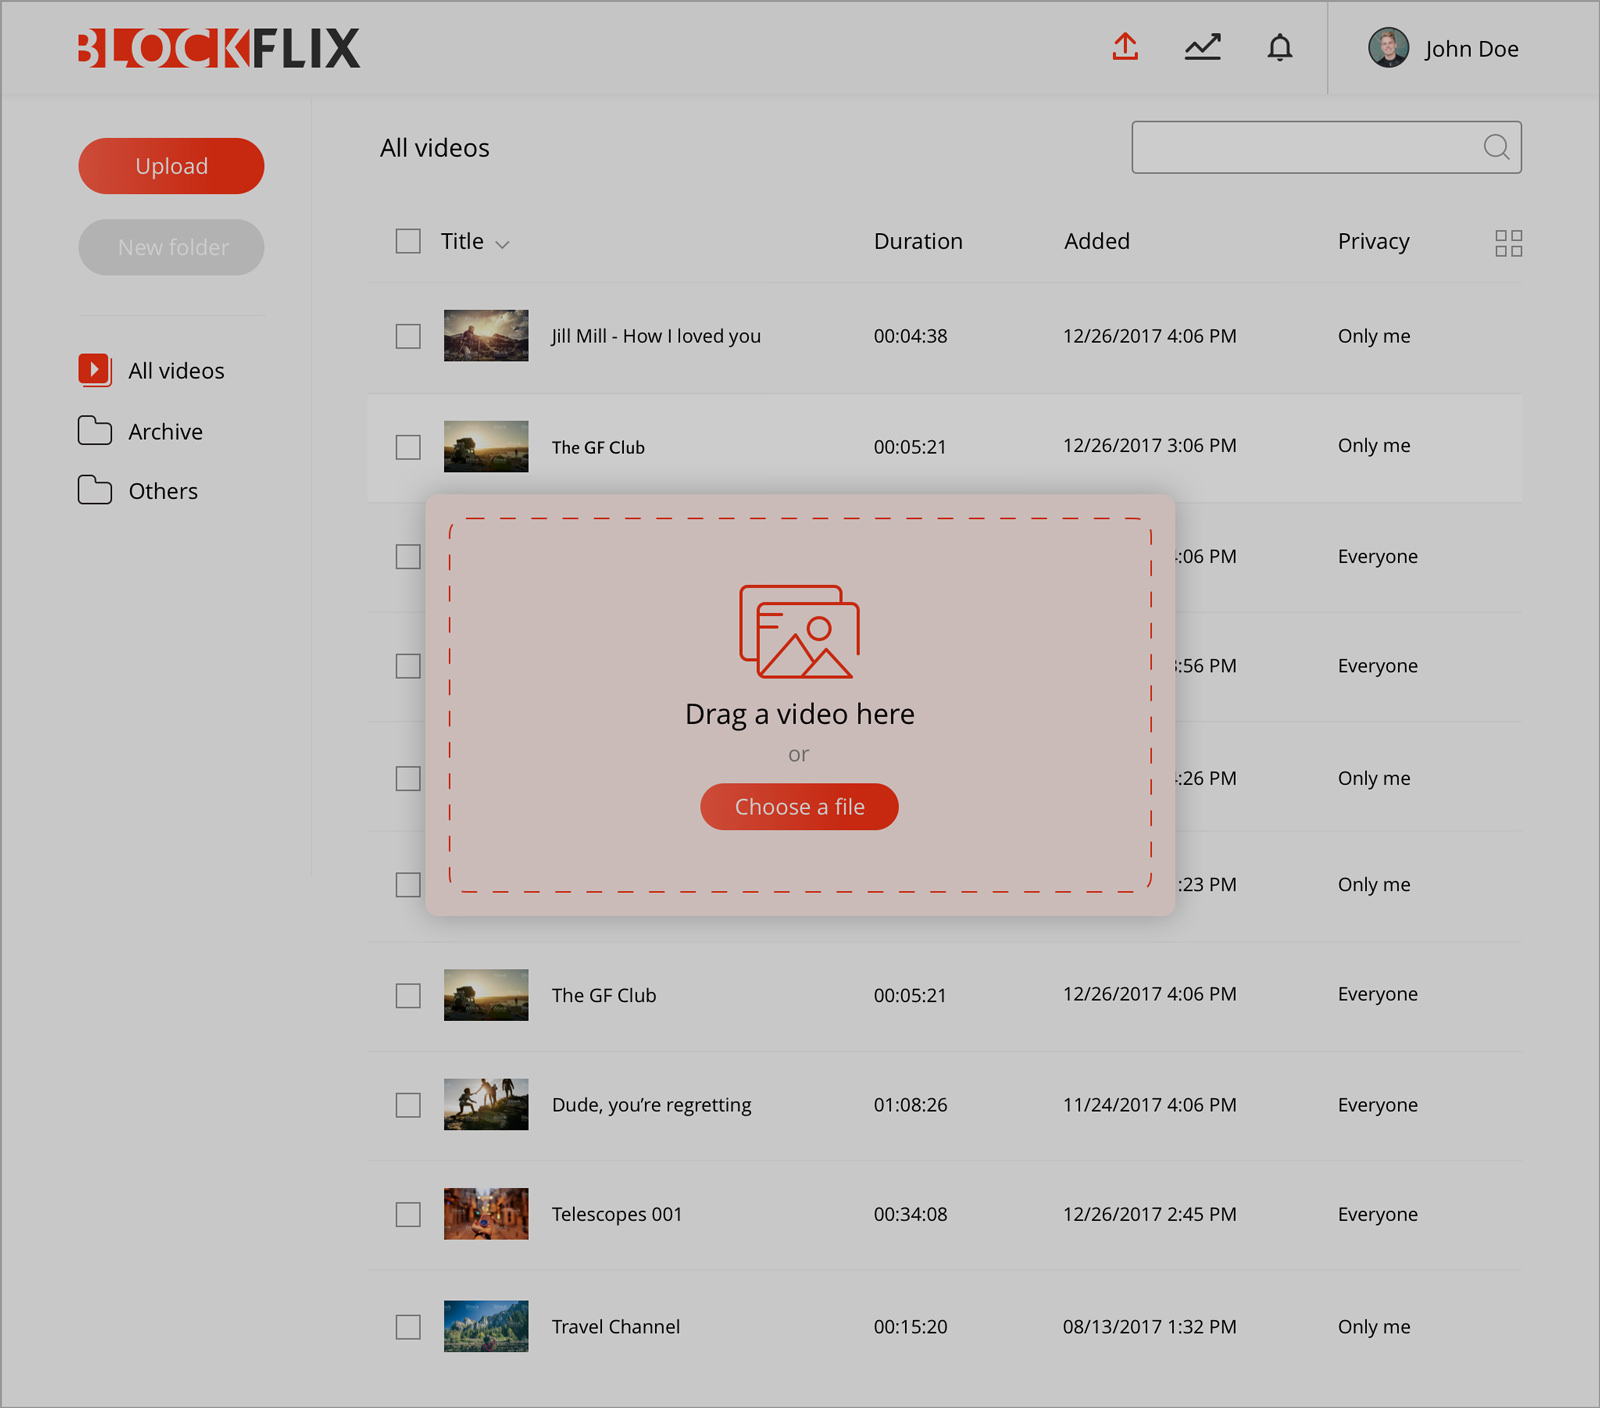 Blockflix-Dashboard_uploading